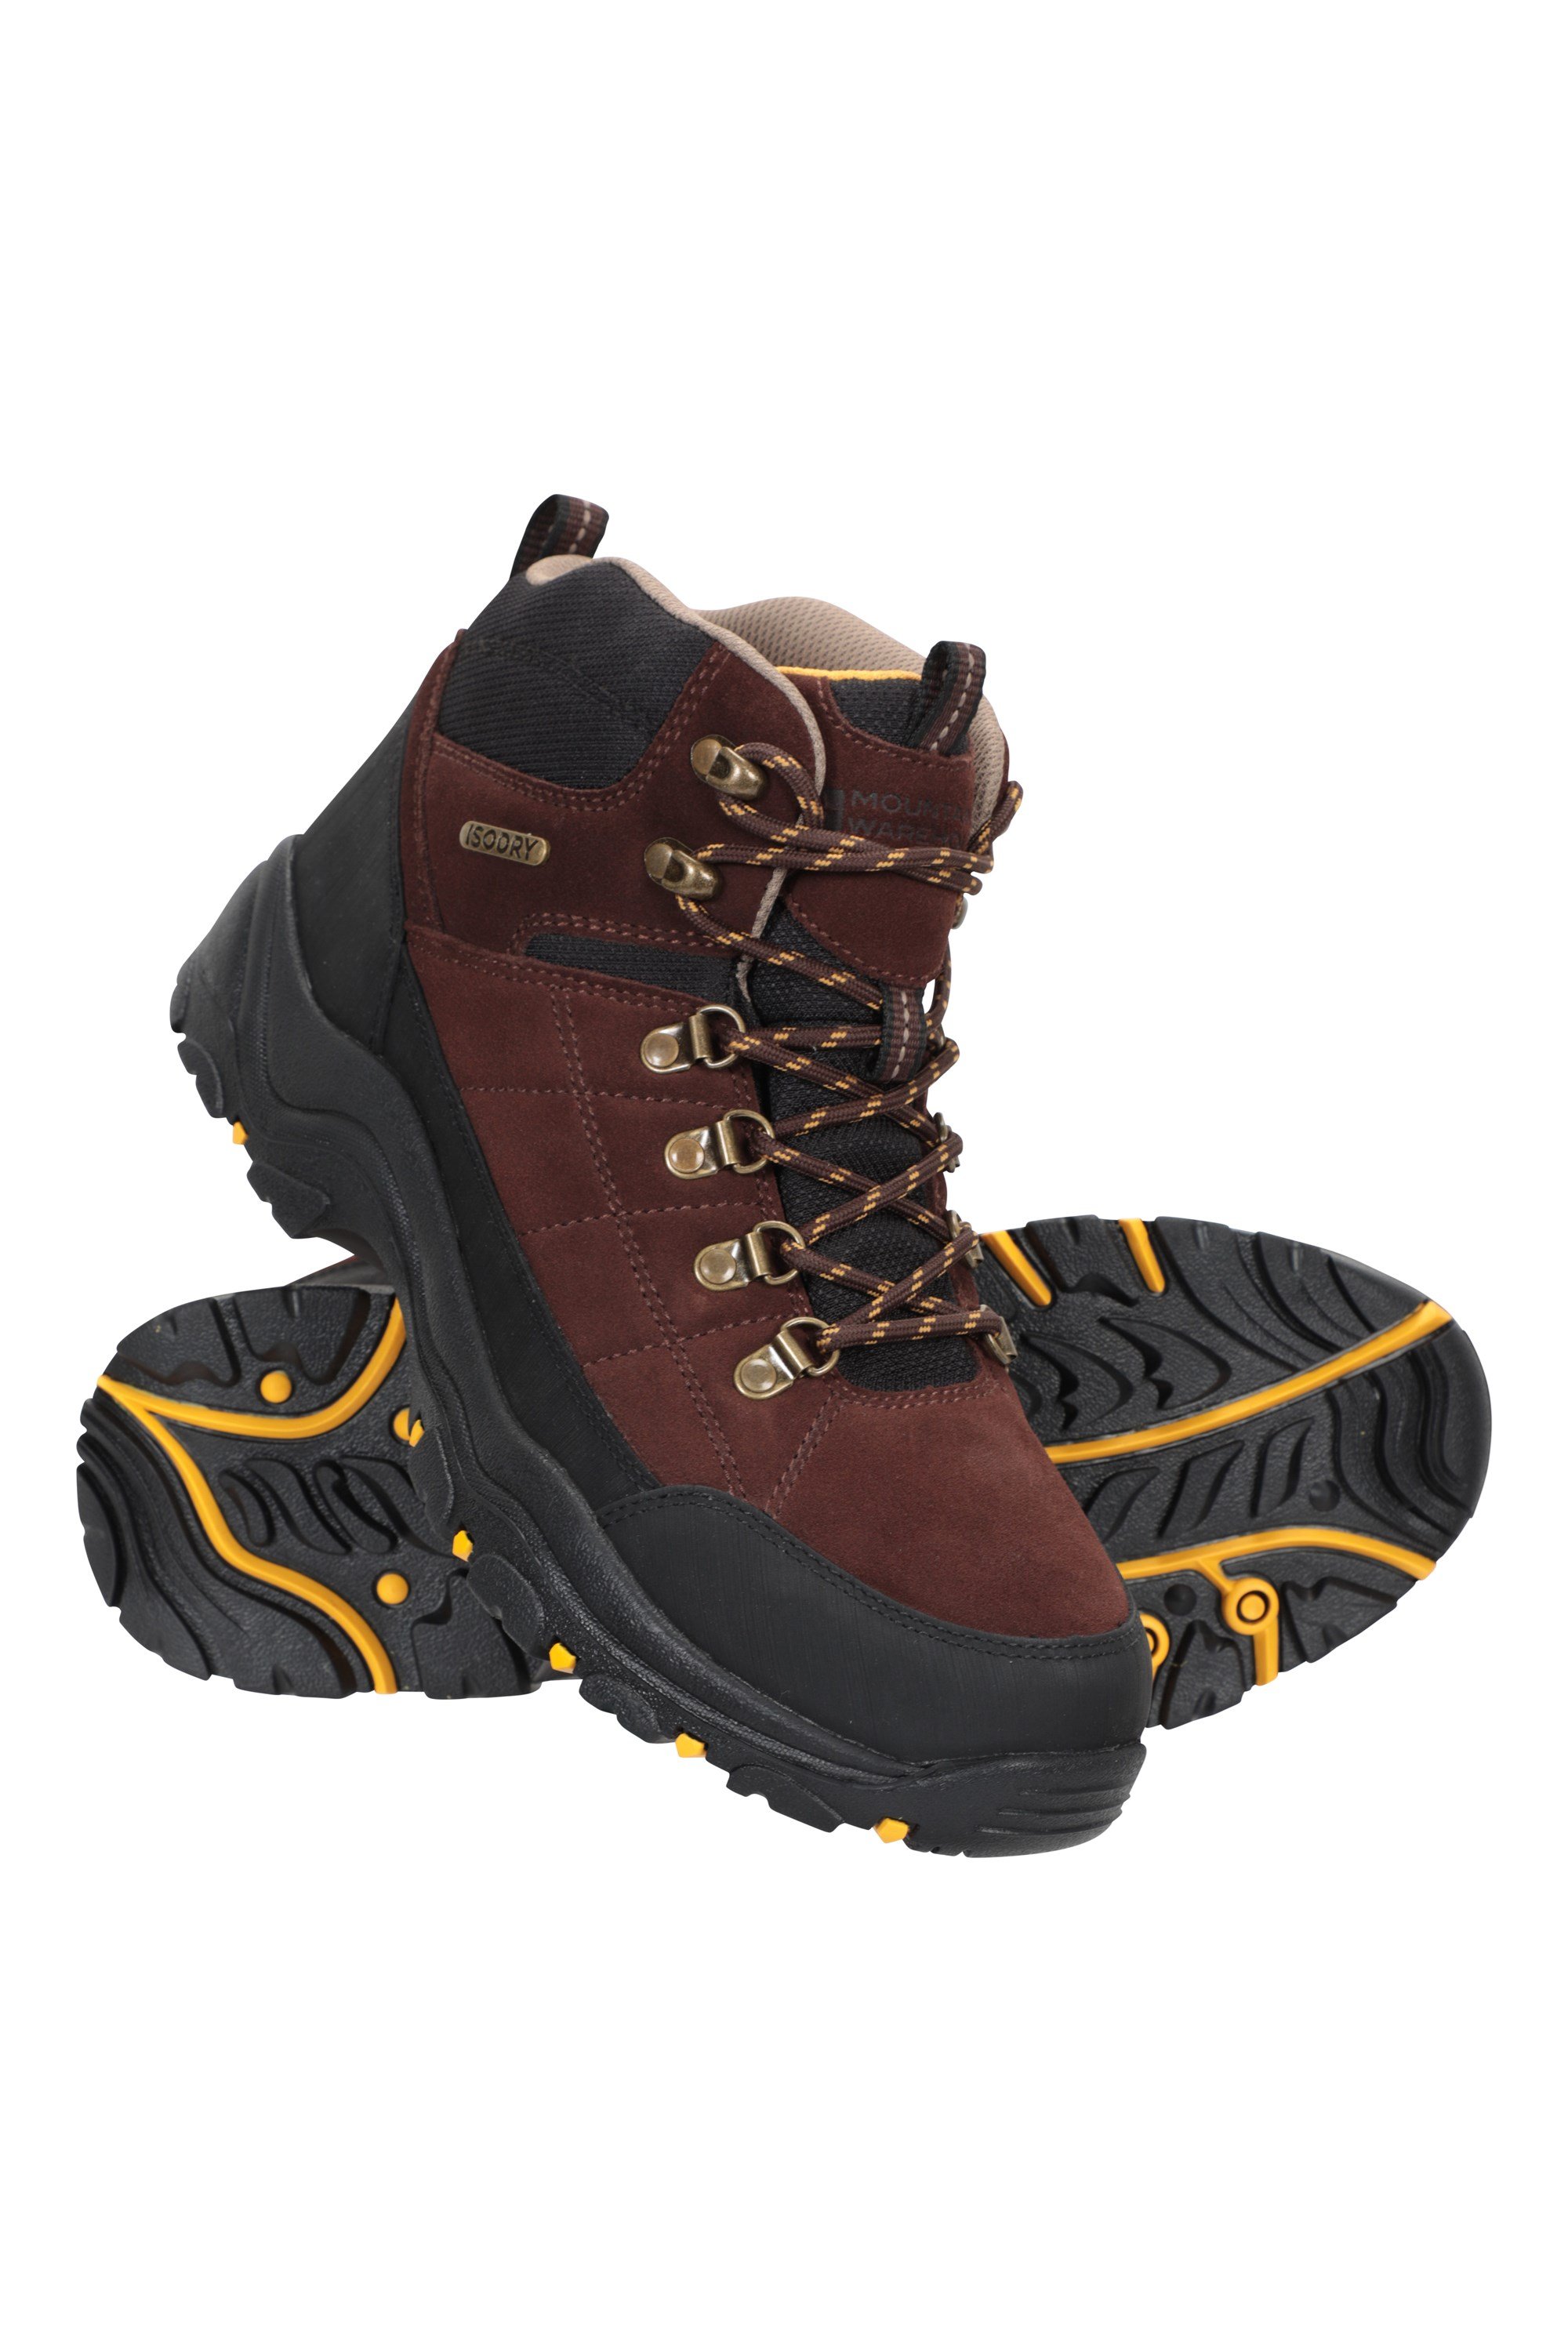 Walking Boots | Waterproof Hiking Boots 